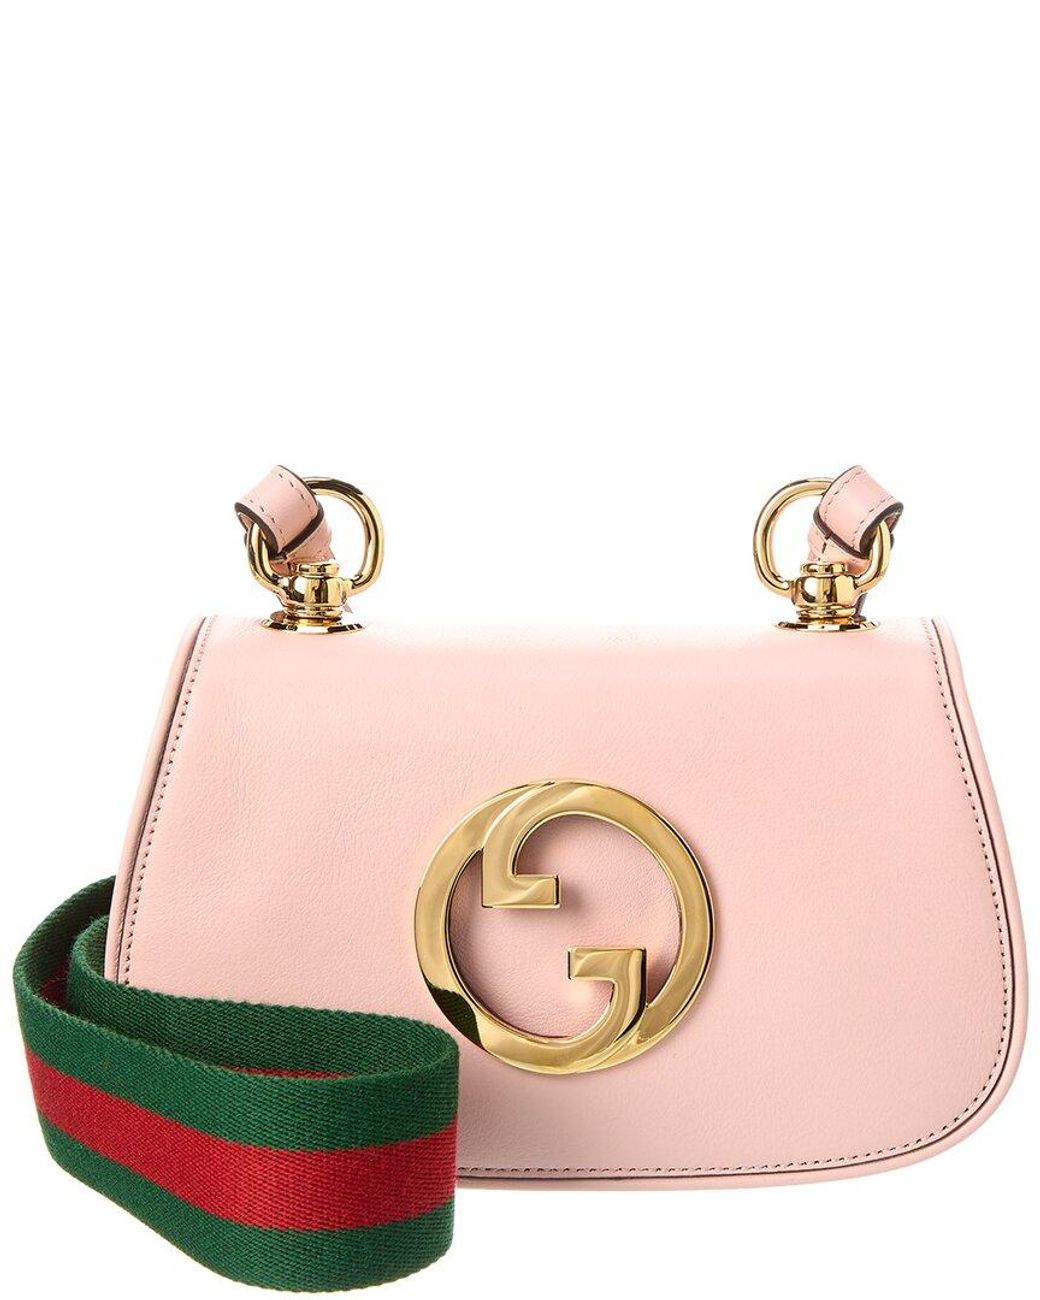 Gucci Blondie Mini Leather Shoulder Bag in Pink